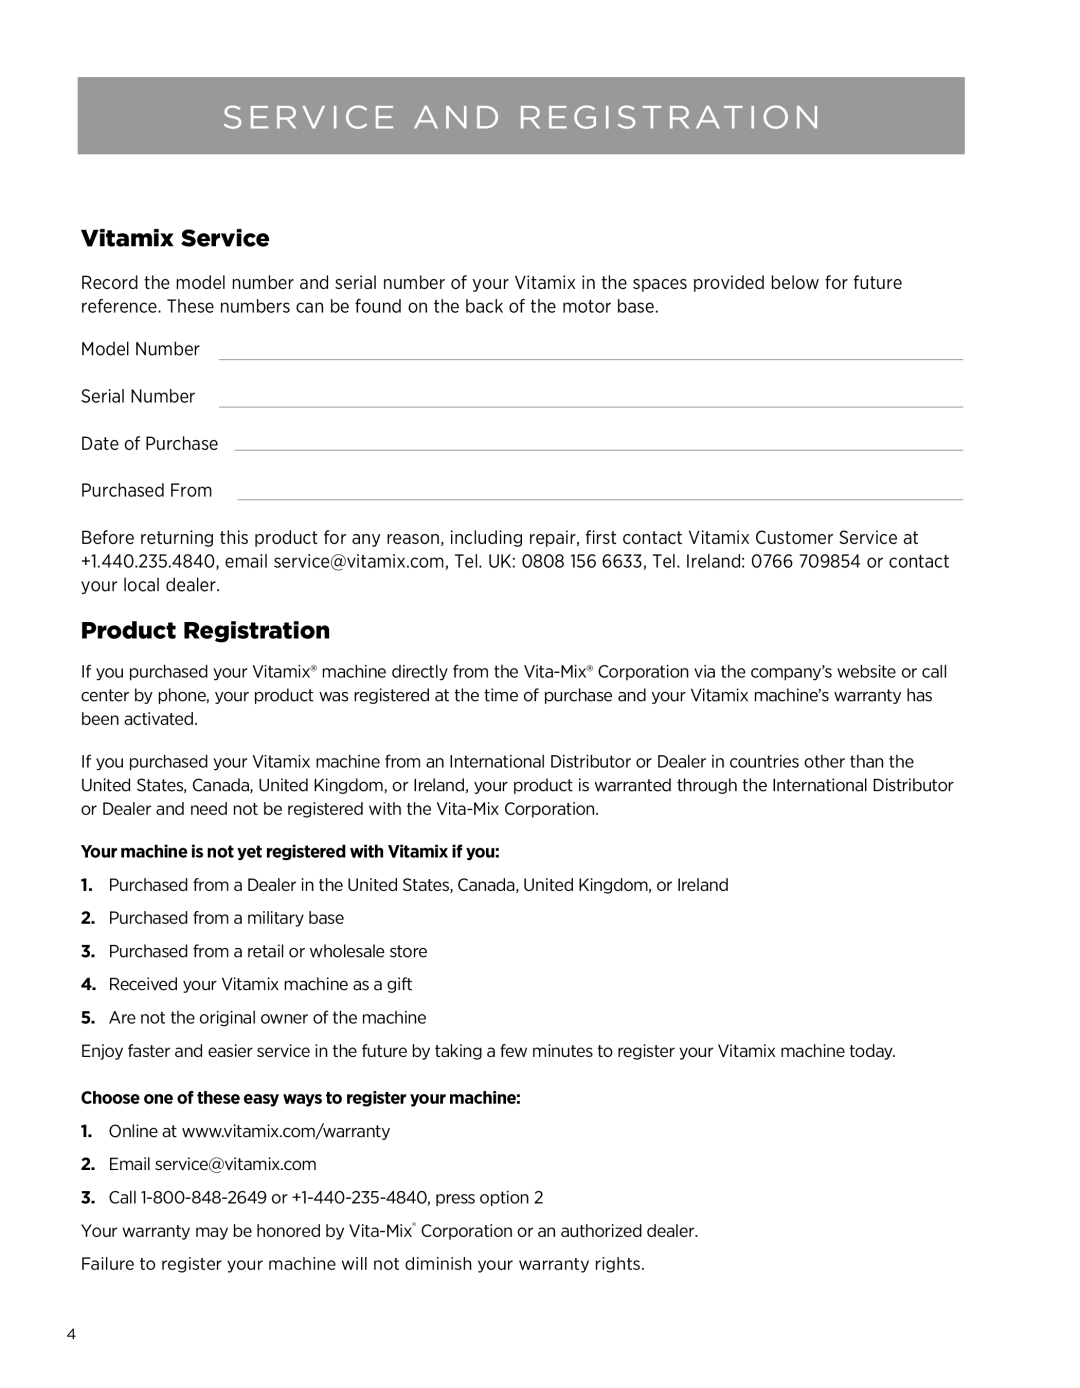 Vita-Mix Professional Series 500 owner manual Service And Registration, Vitamix Service, Product Registration 